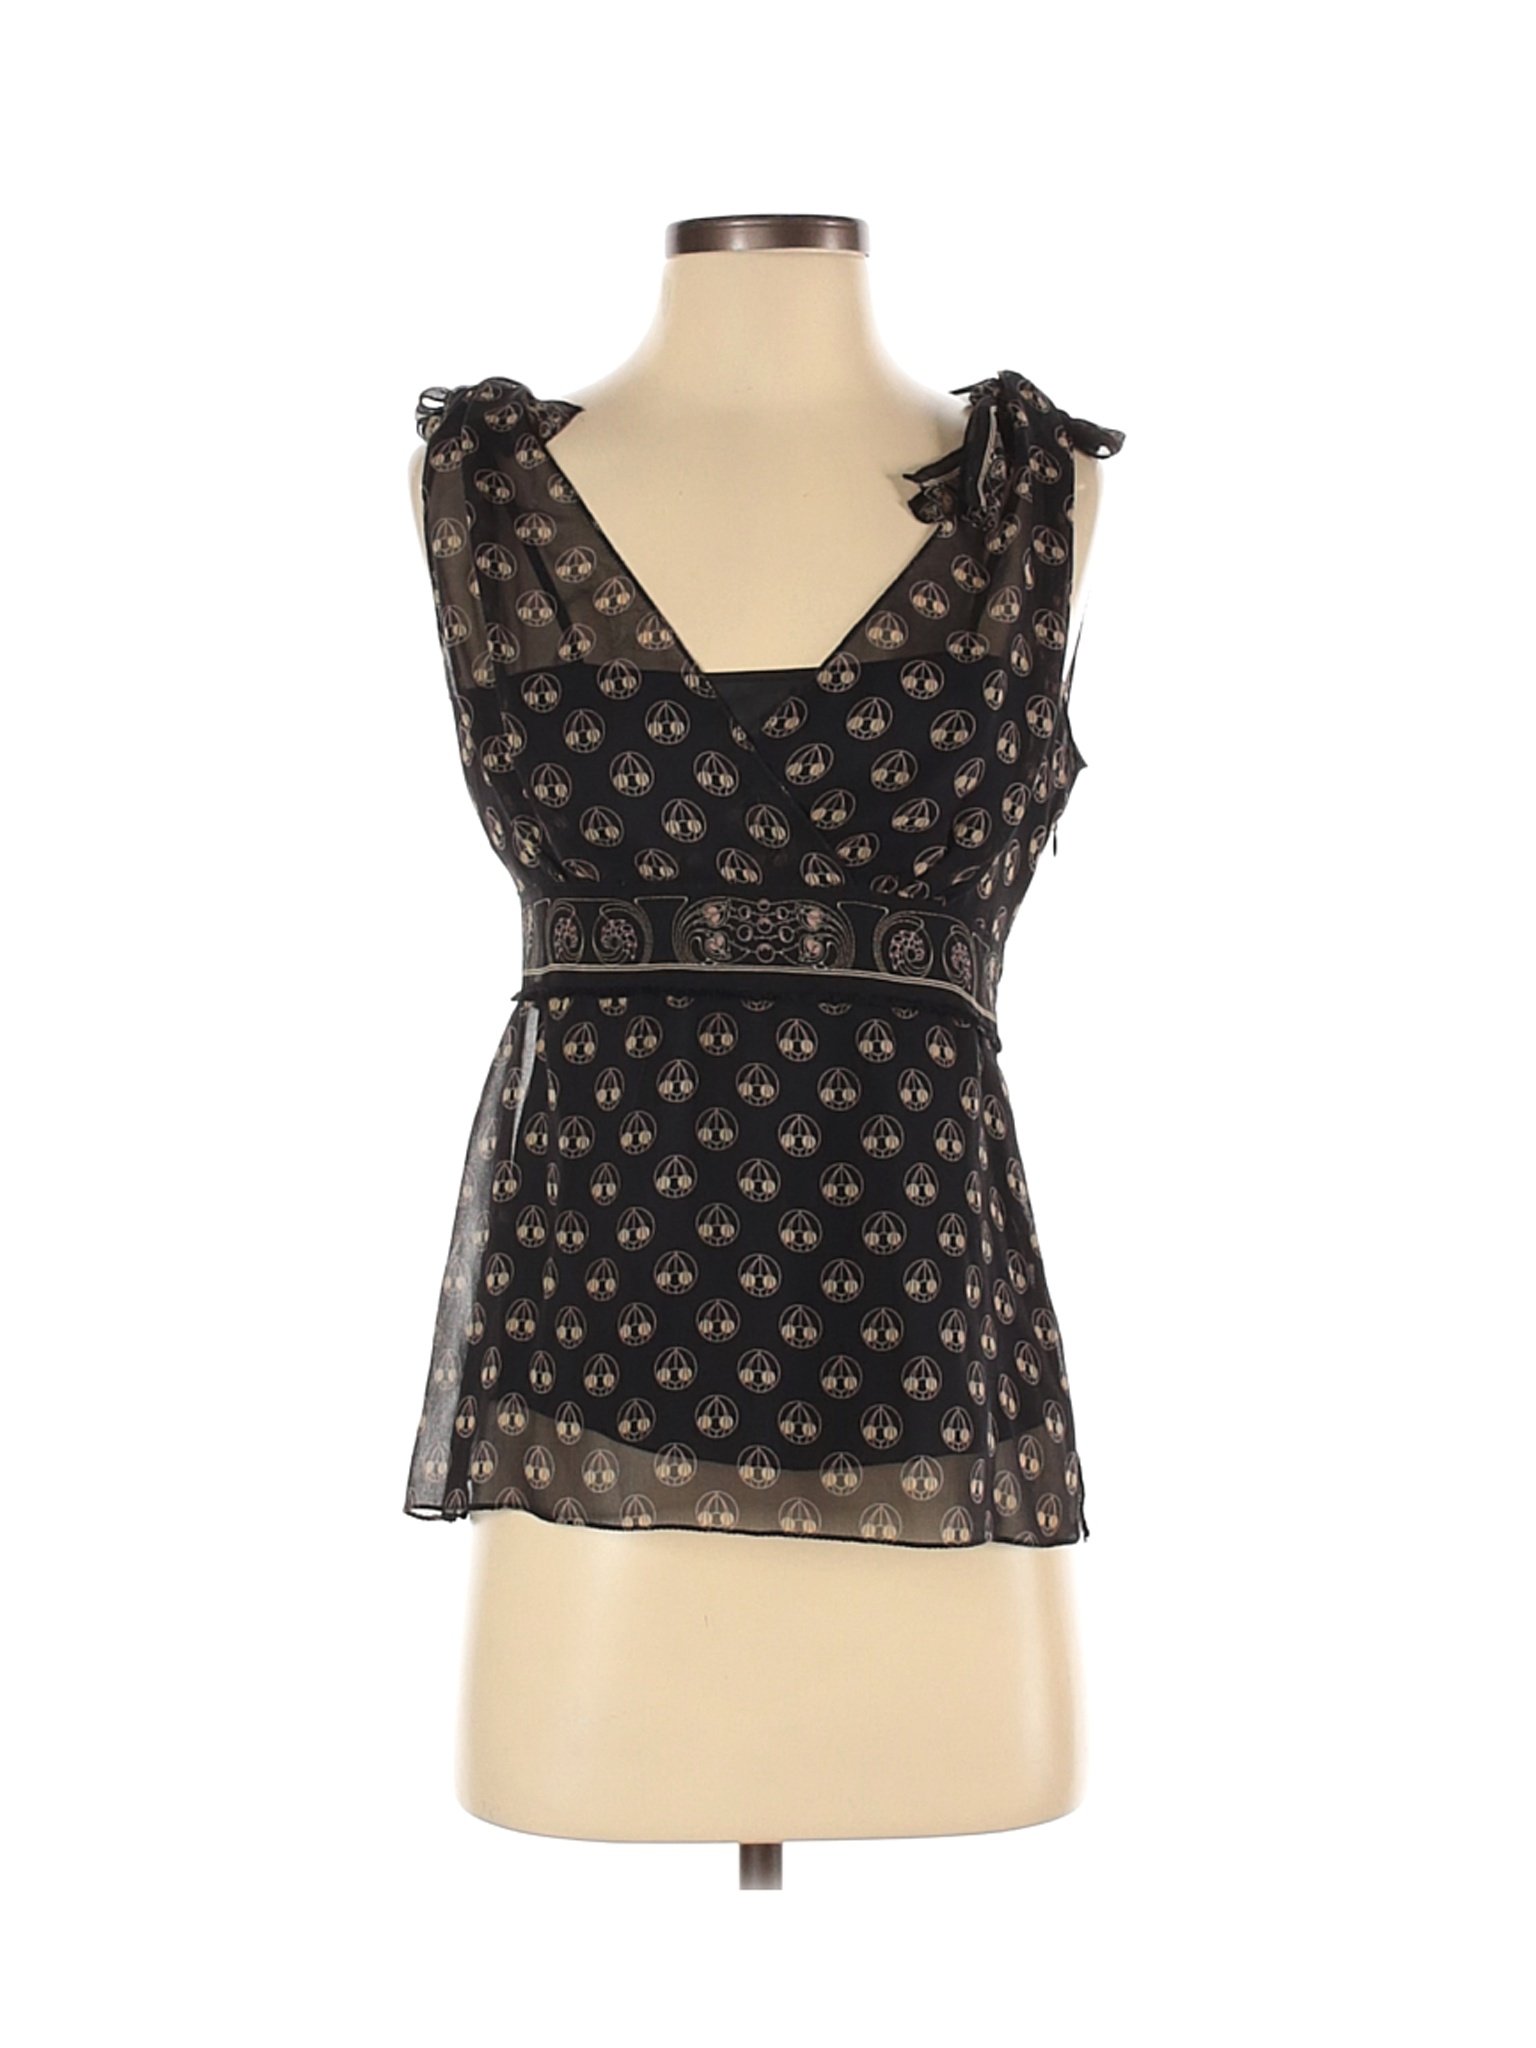 Max Studio Women Black Sleeveless Silk Top S | eBay